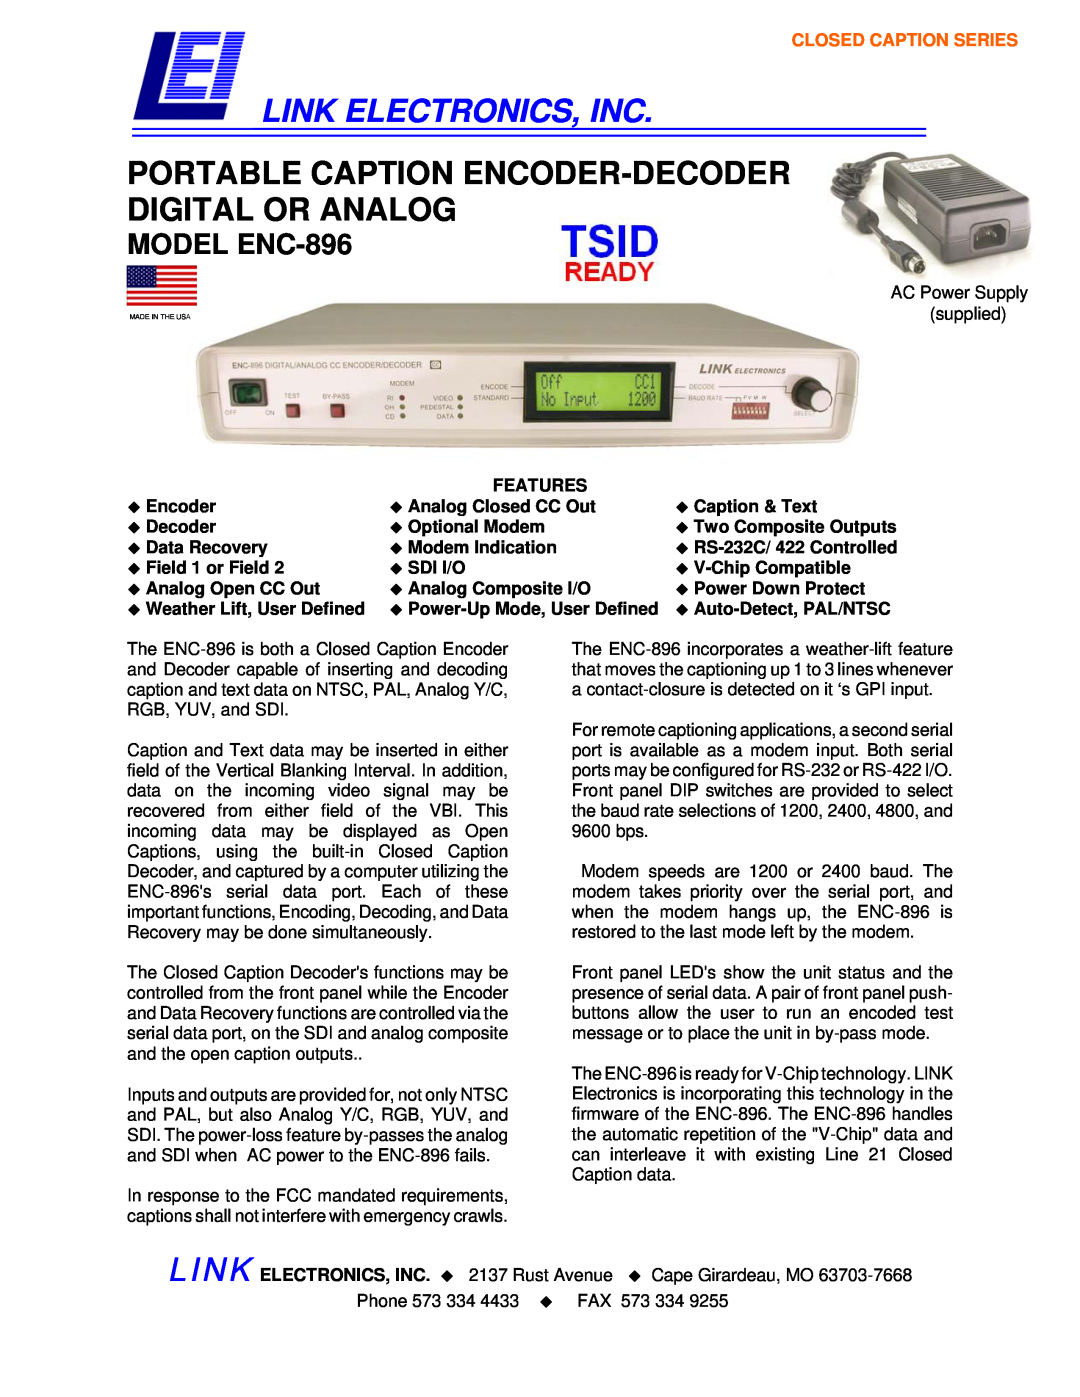 Link electronic manual Link Electronics, Inc, Portable Caption Encoder-Decoder Digital Or Analog, MODEL ENC-896 